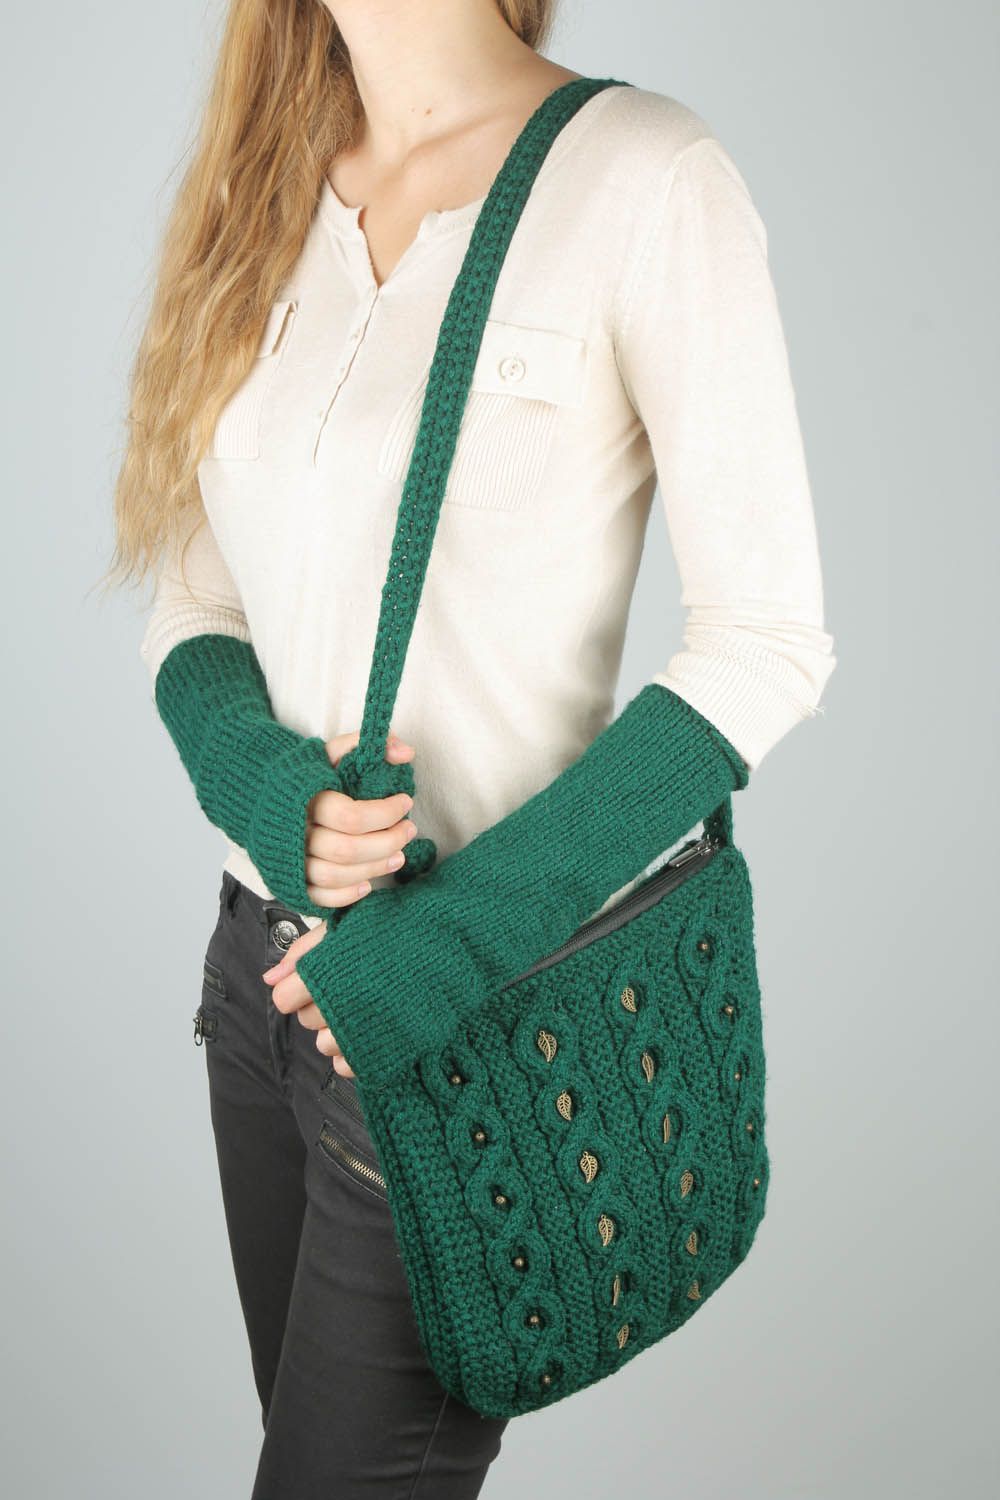 Crochet purse and oversleeves photo 1